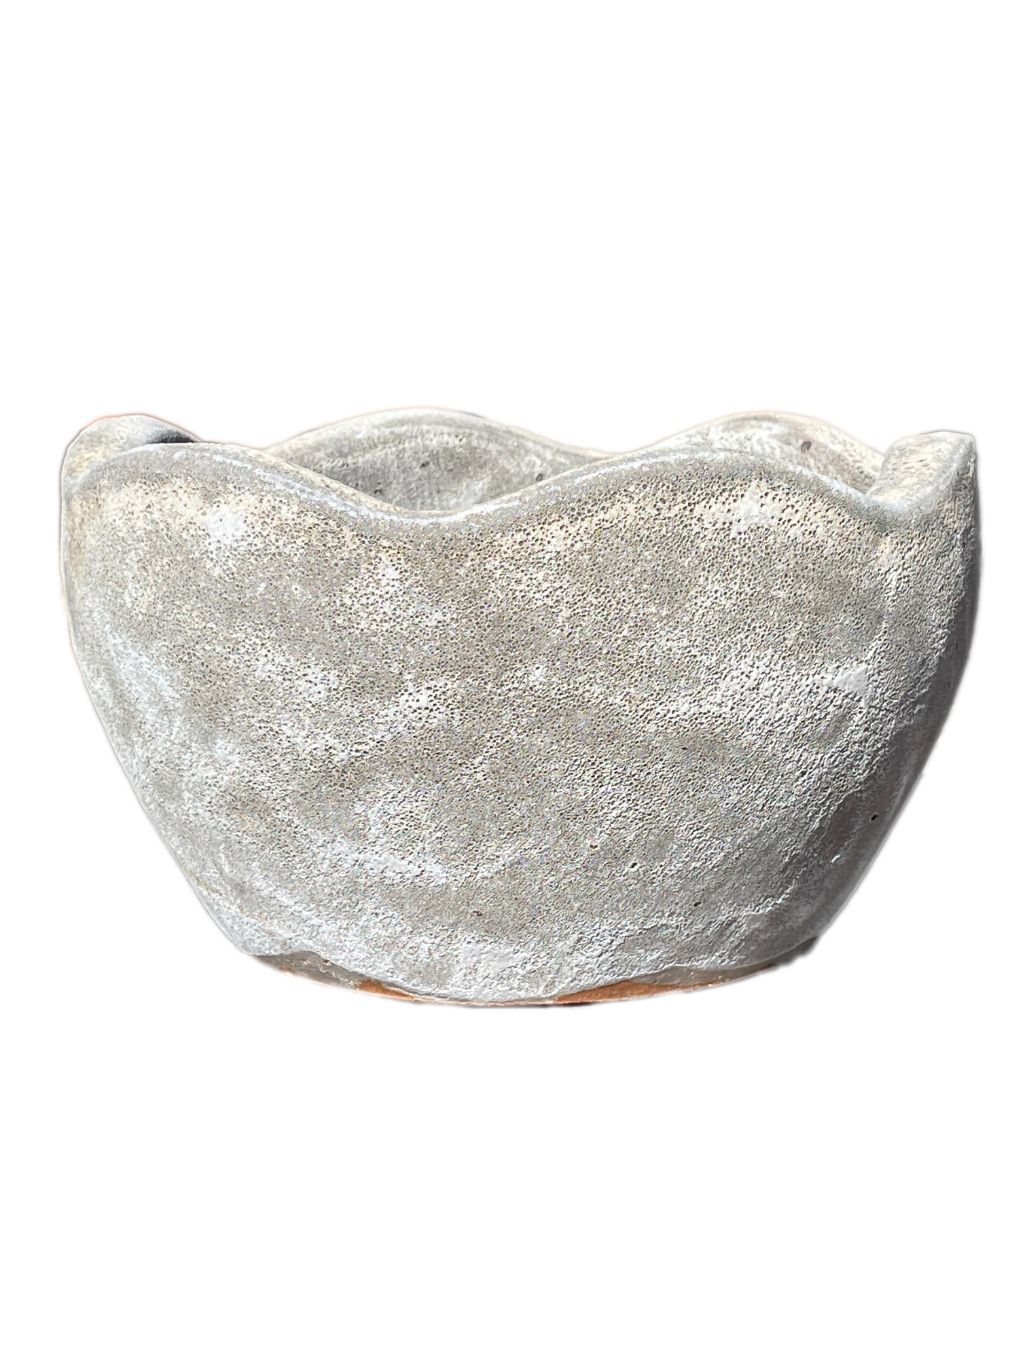 Seafoam White Ceramic Wavy Rim Low Bowl